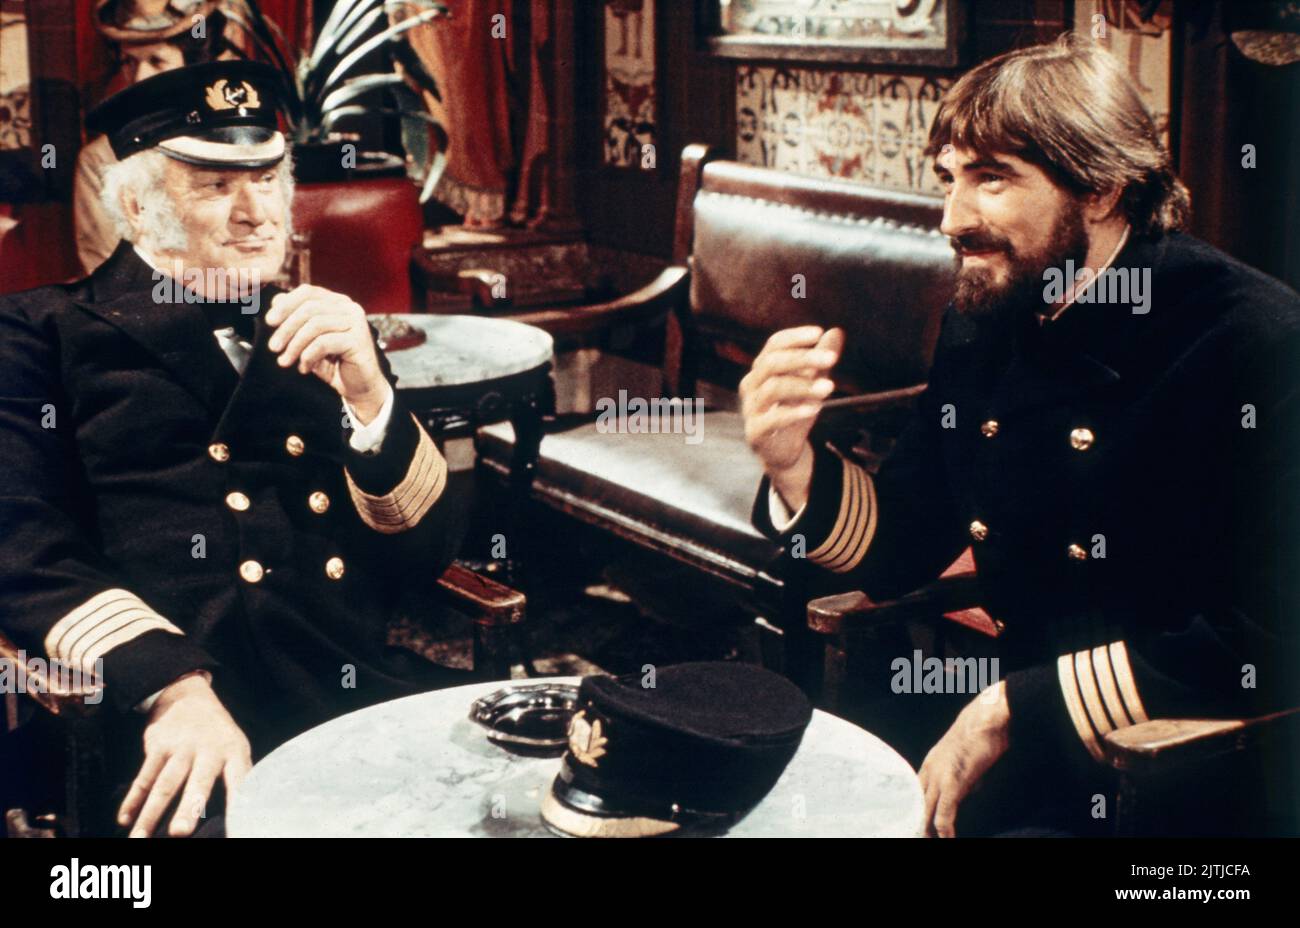 La línea Onedin, aka: Die Onedin-Linie, Großbritannien Fernsehserie, 1971 - 1980, Darsteller: Howard Lang (links). Foto de stock